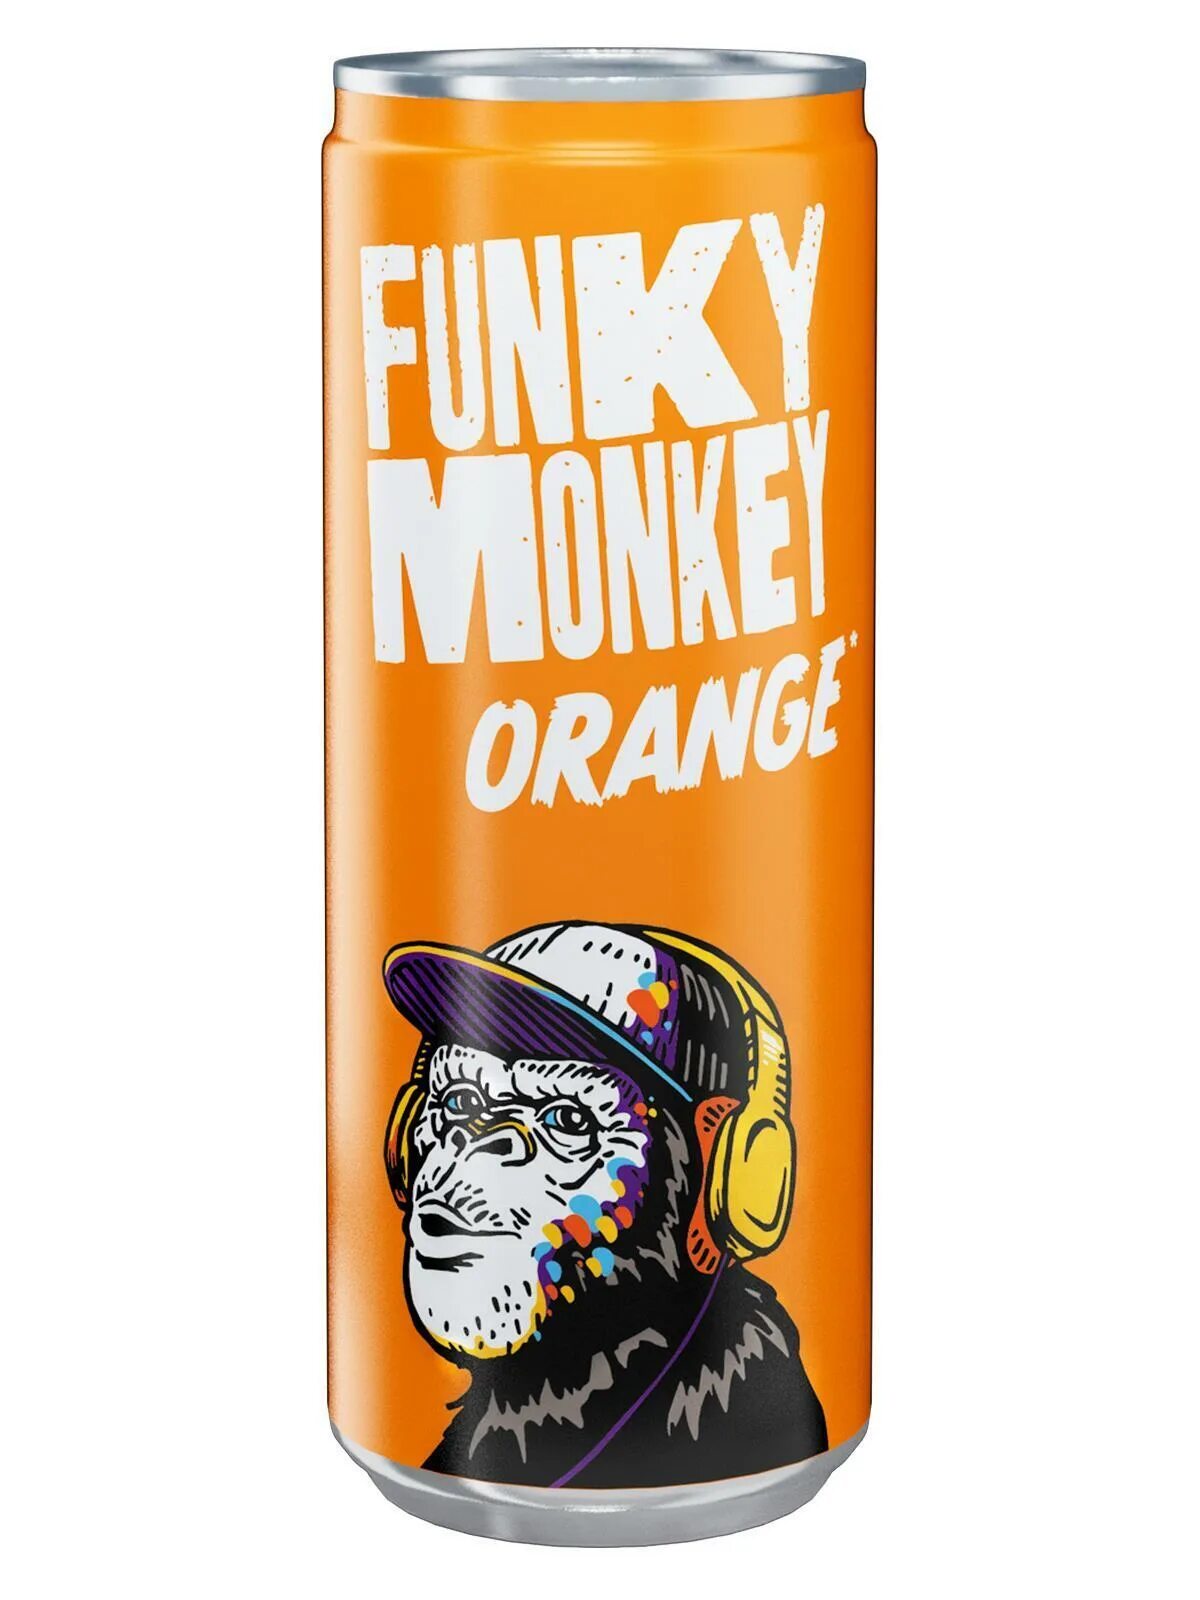 Манки 0.7. Фанки манки оранж 0.33. Напиток ГАЗ. Фанки манки оранж 0,33л*12 ж/б. Напиток Funky Monkey Orange. Напиток безалкогольный Фанки манки оранж.